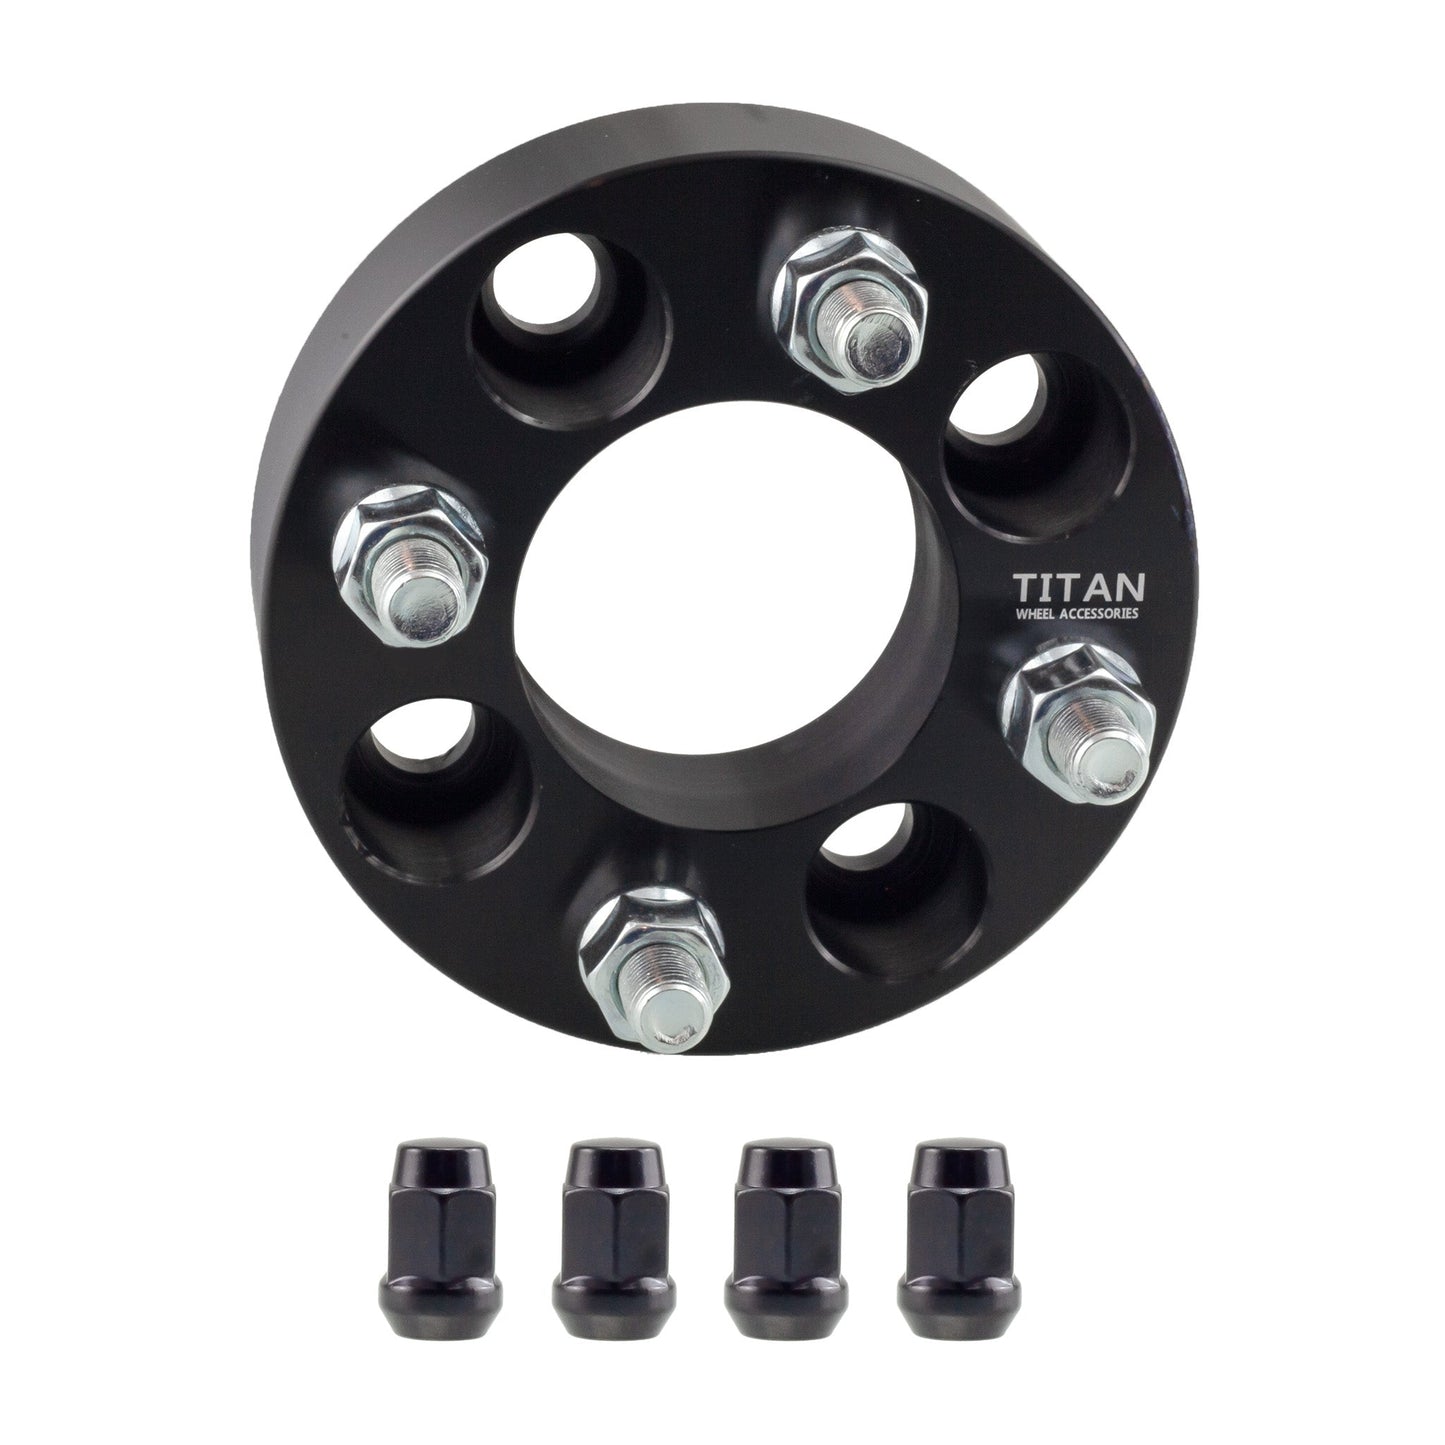 15mm Titan Wheel Spacers for Honda Civic Mitsubishi Lancer | 4x100 | 56.1 Hubcentric | 12x1.5 Studs | Titan Wheel Accessories